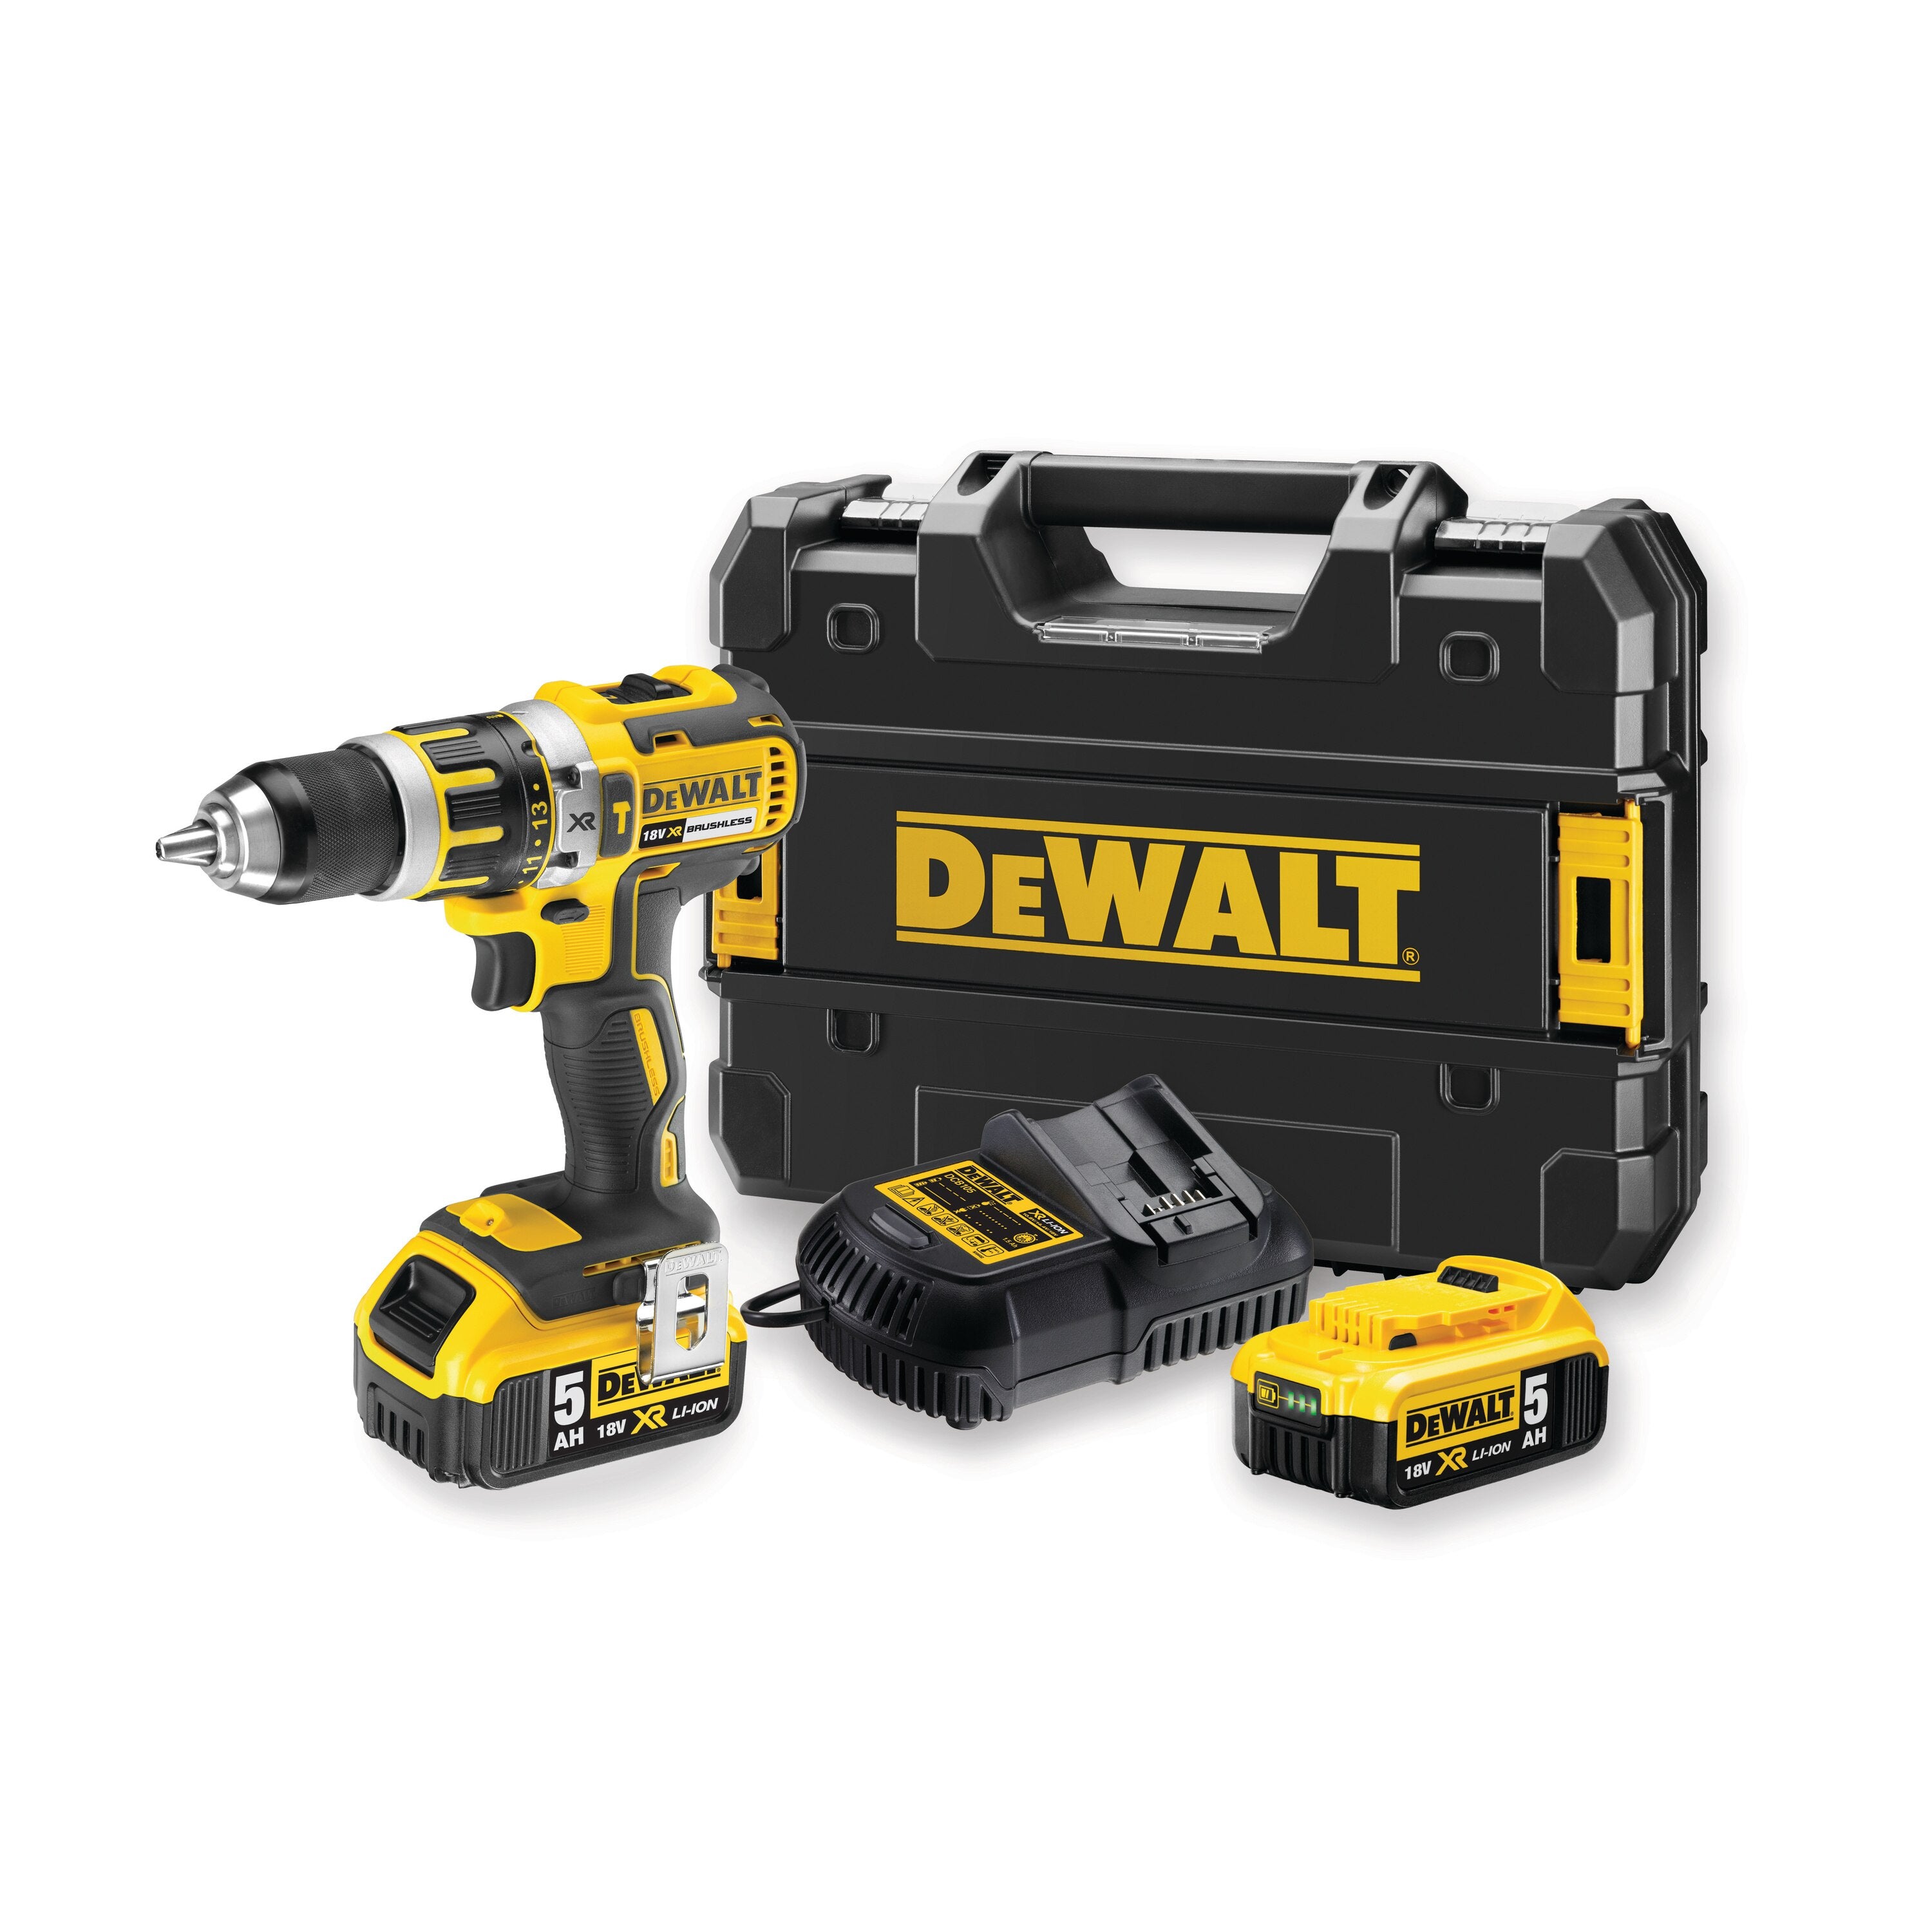 Dewalt is Launching 2 New Cordless Drills – DCD793, DCD798